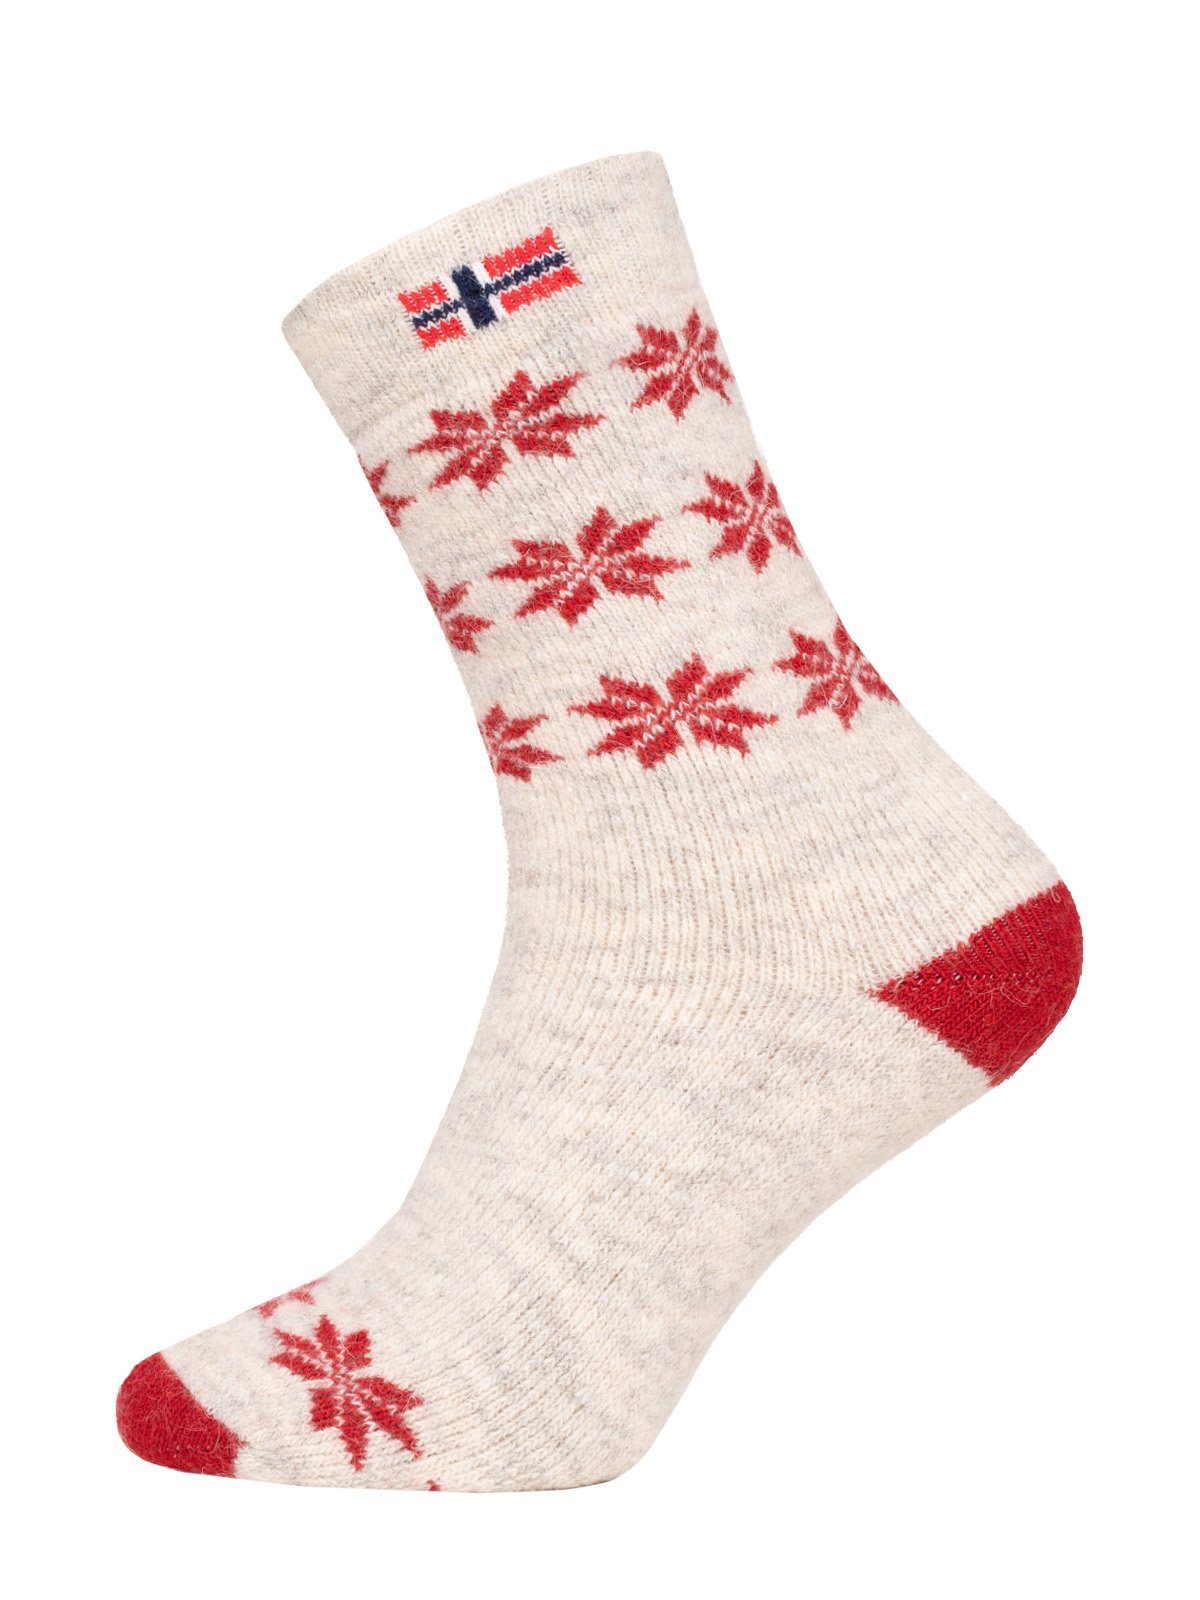 Hyggelig Nordic Norwegen" Norwegischem Wollanteil HomeOfSocks Rot Design Kuschelsocken Warm Hoher Skandinavische 80% "Snowflake Wollsocke Dicke Socken Socken